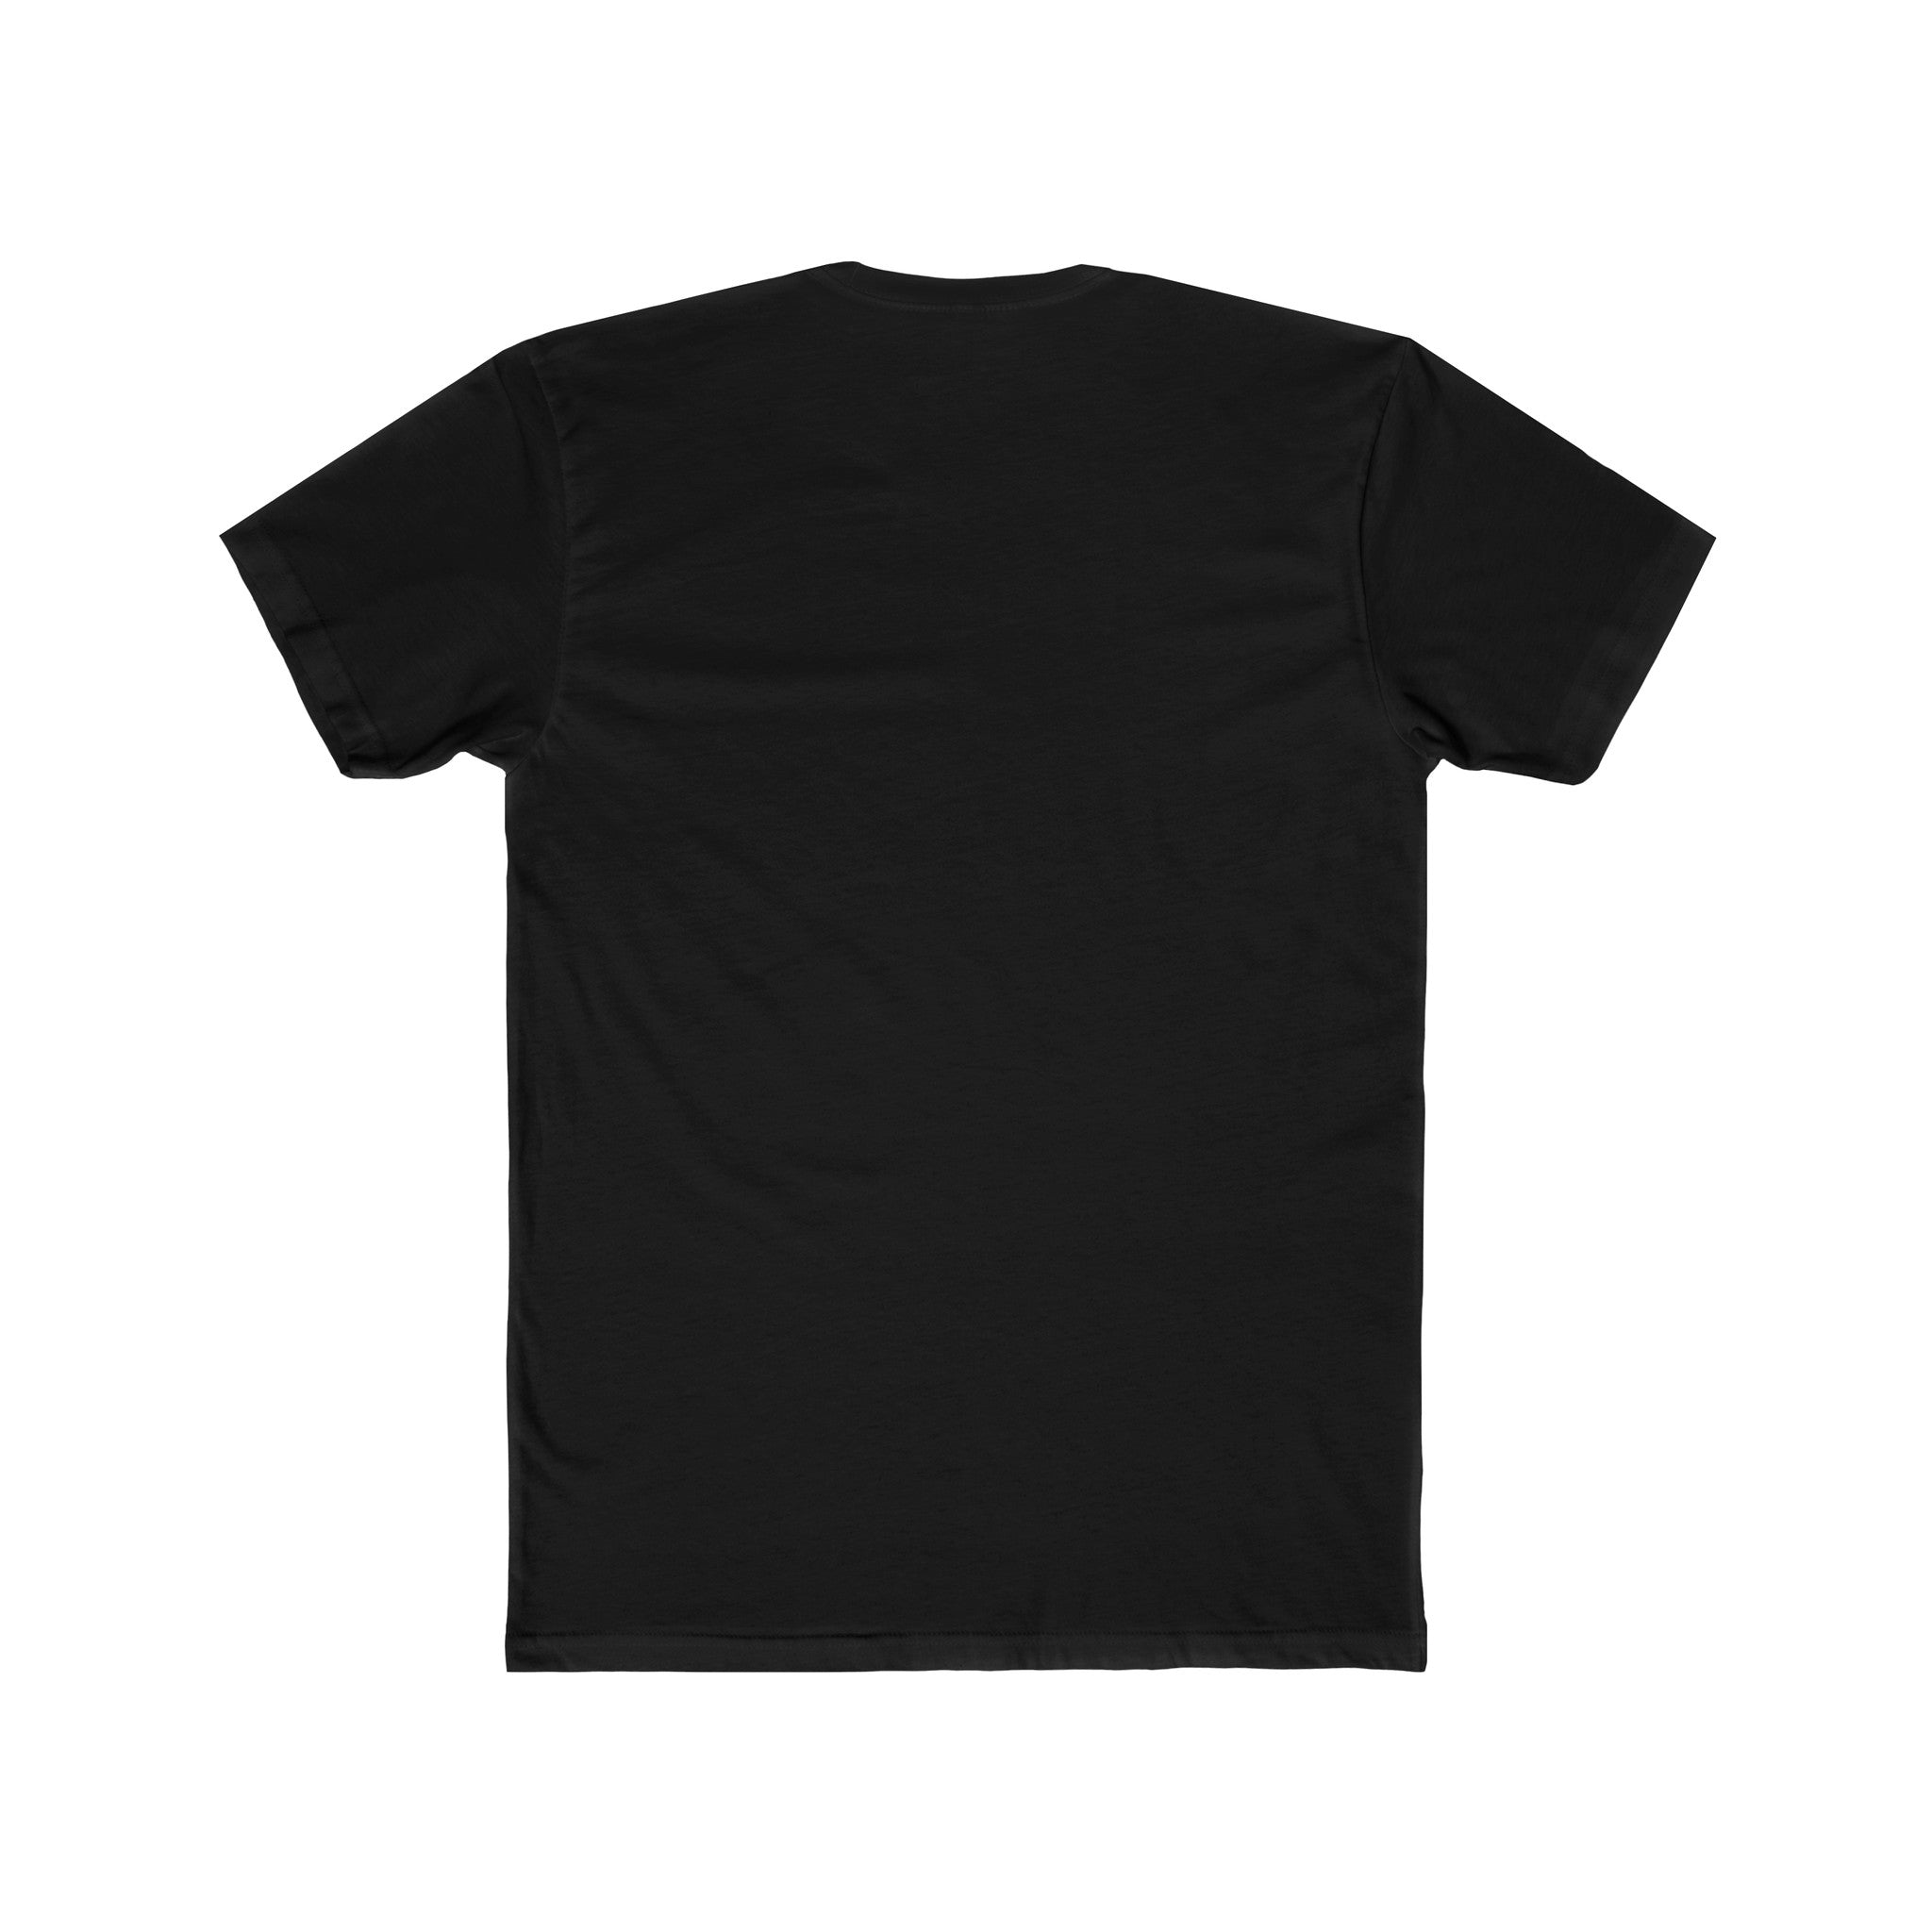 40 Oz Culture Cipher T-Shirt Black Quickstrike